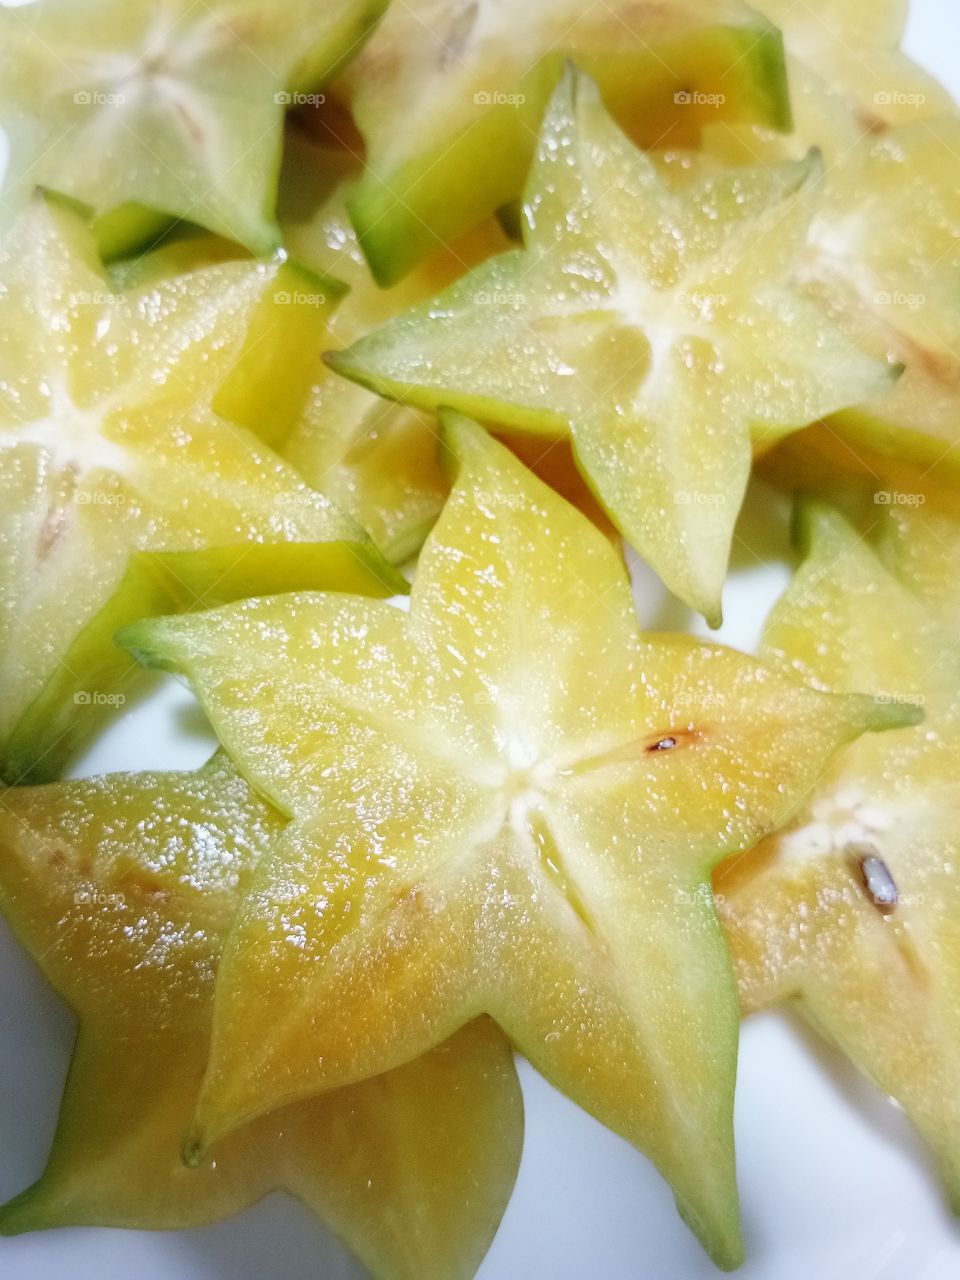 star fruit
fruit
yellow
sweet
health